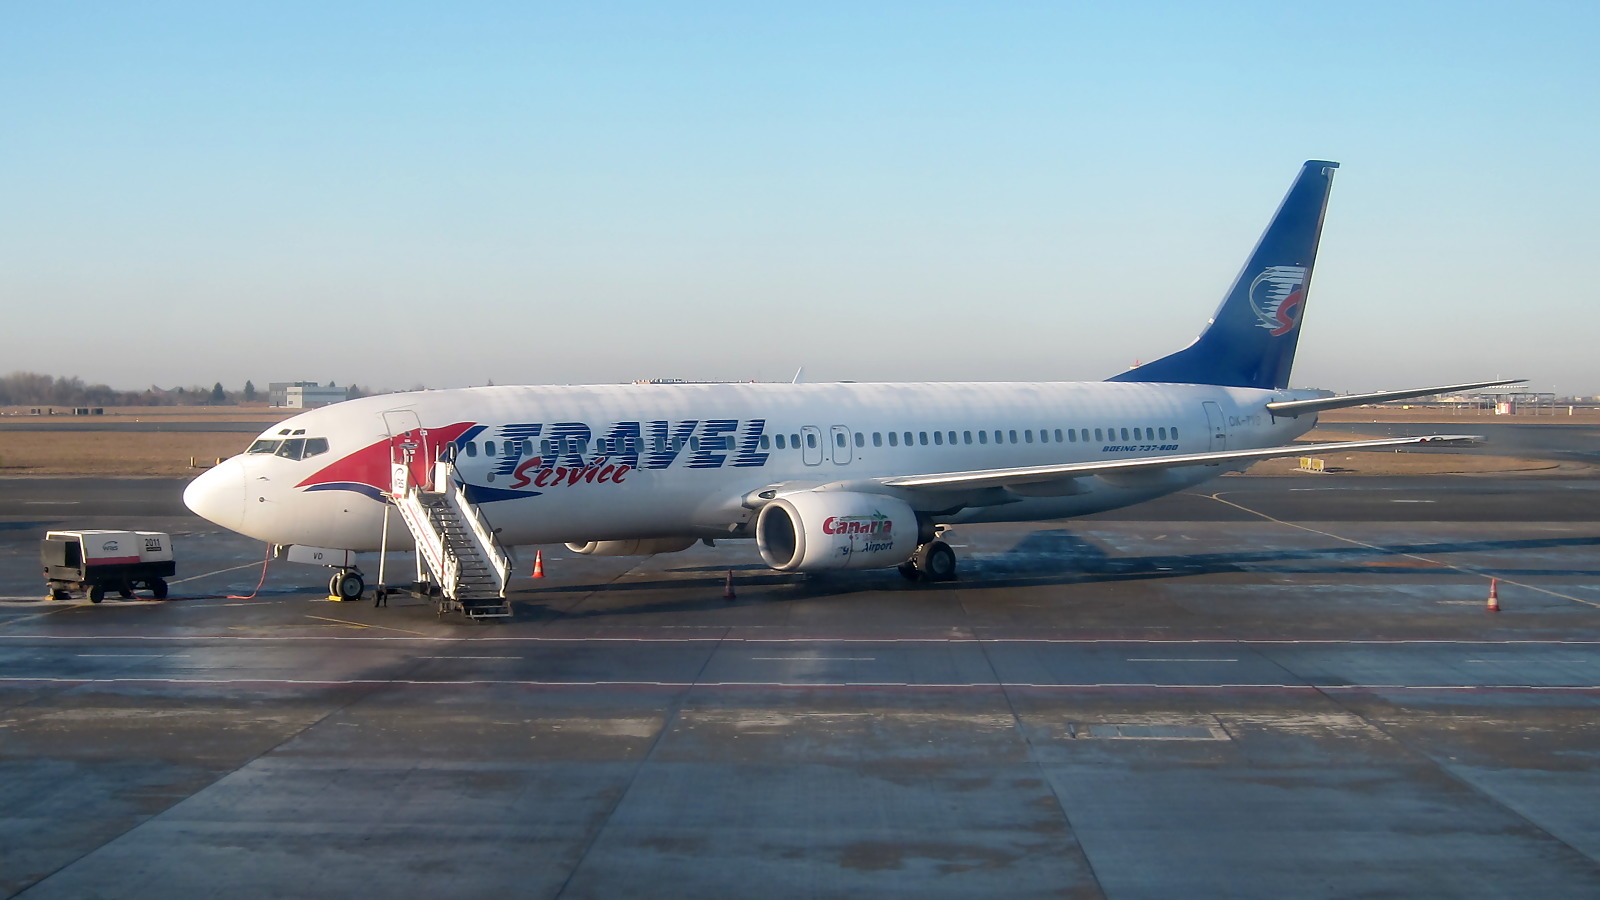 OK-TVD ✈ Travel Service Boeing 737-86N @ Warsaw-Chopin